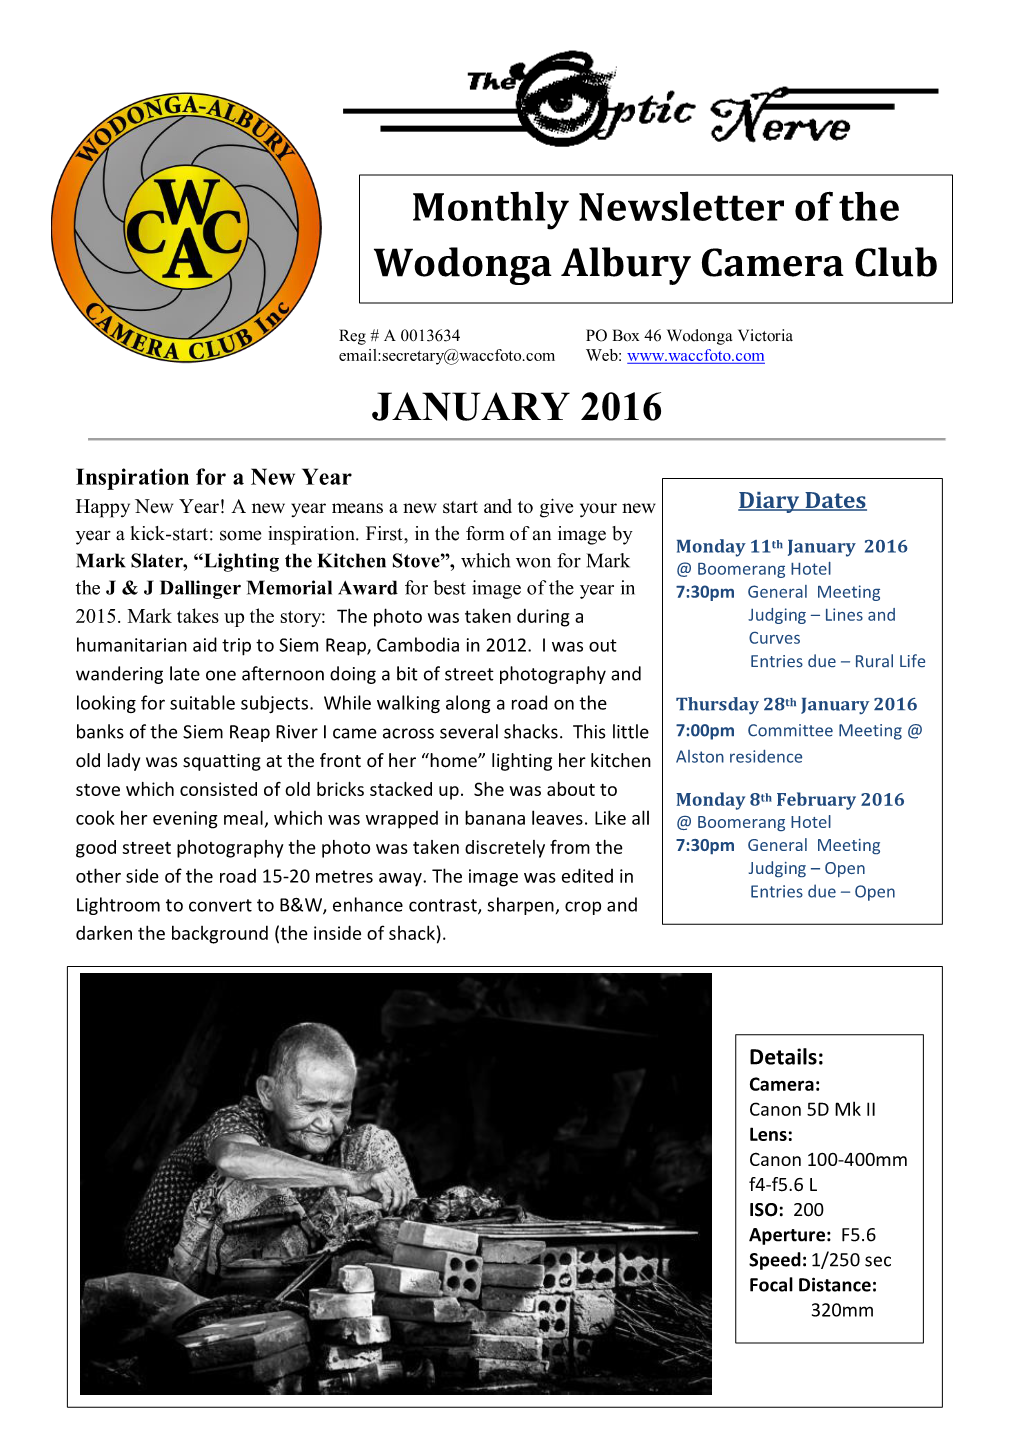 JANUARY 2016 Monthly Newsletter of the Wodonga Albury Camera